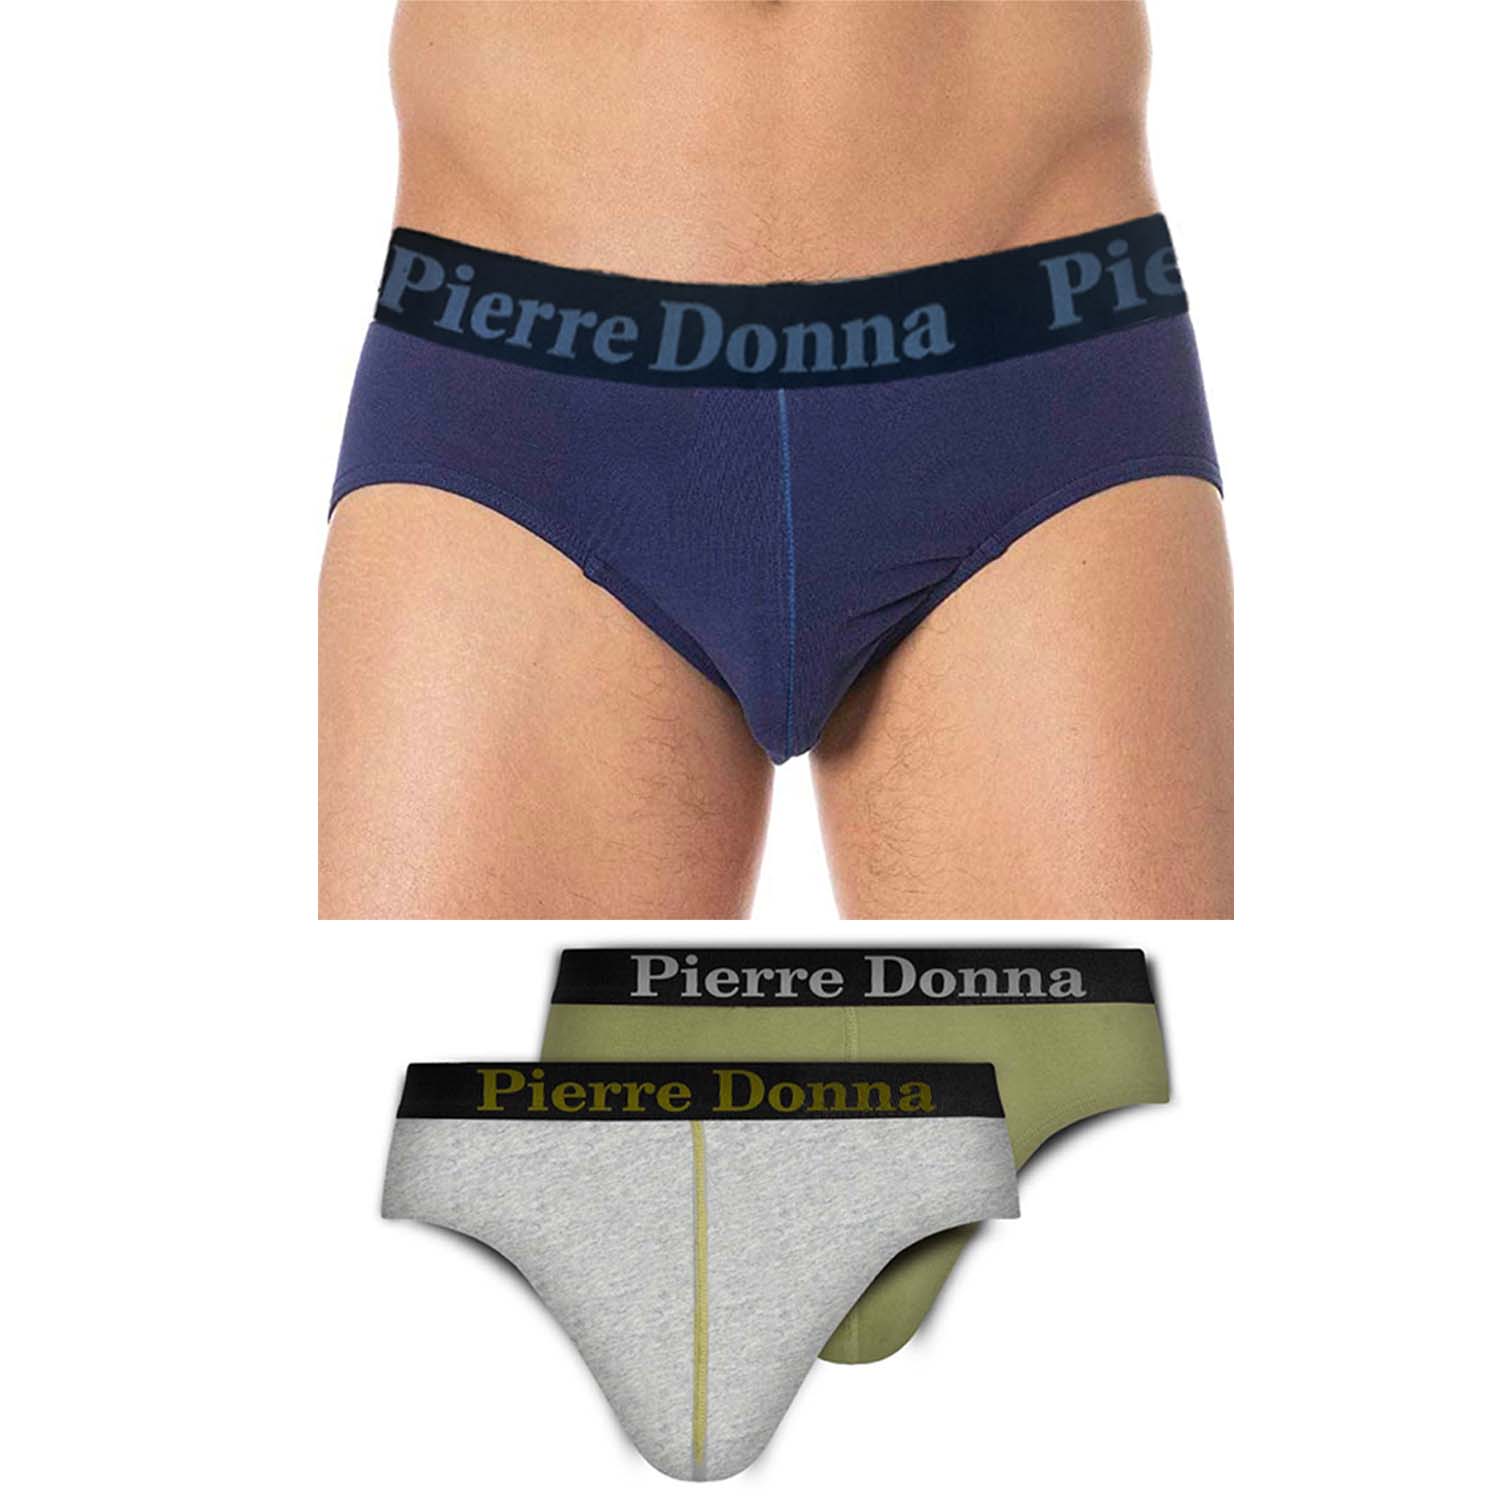 Boxer Shorts Pierre Donna Brief Underwear For Men (pack of 2)(grey & green)